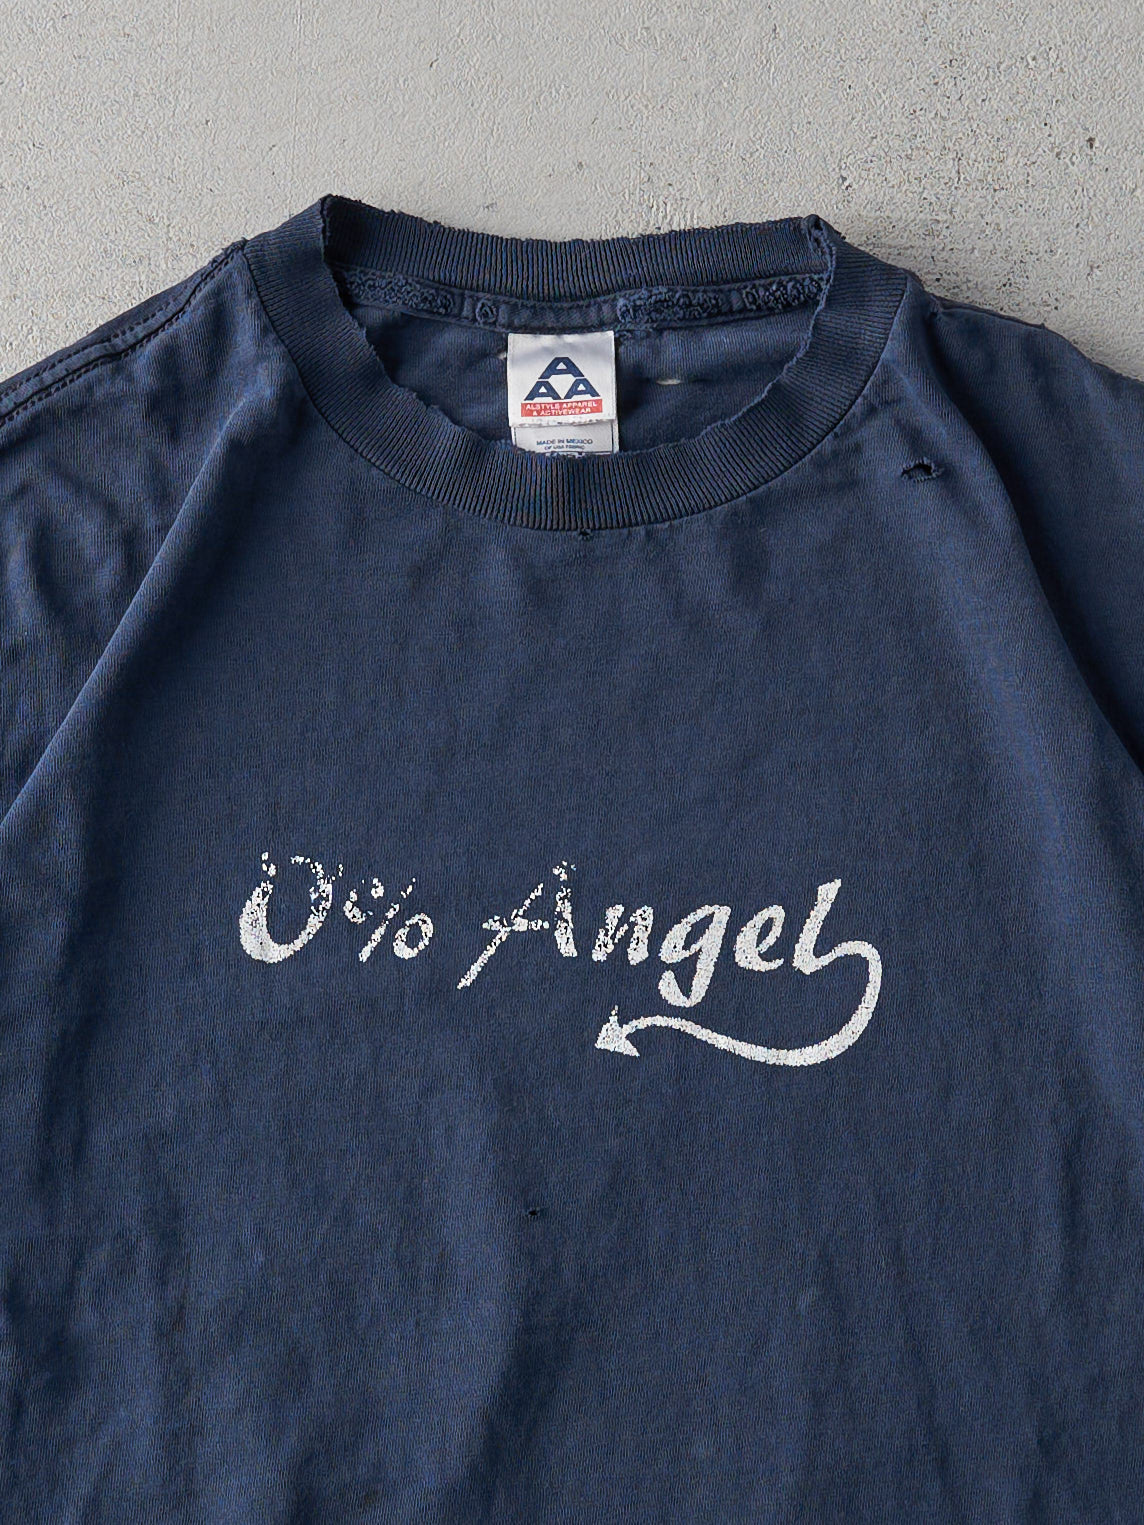 Vintage 90s Navy "0% Angel" Tee (S)